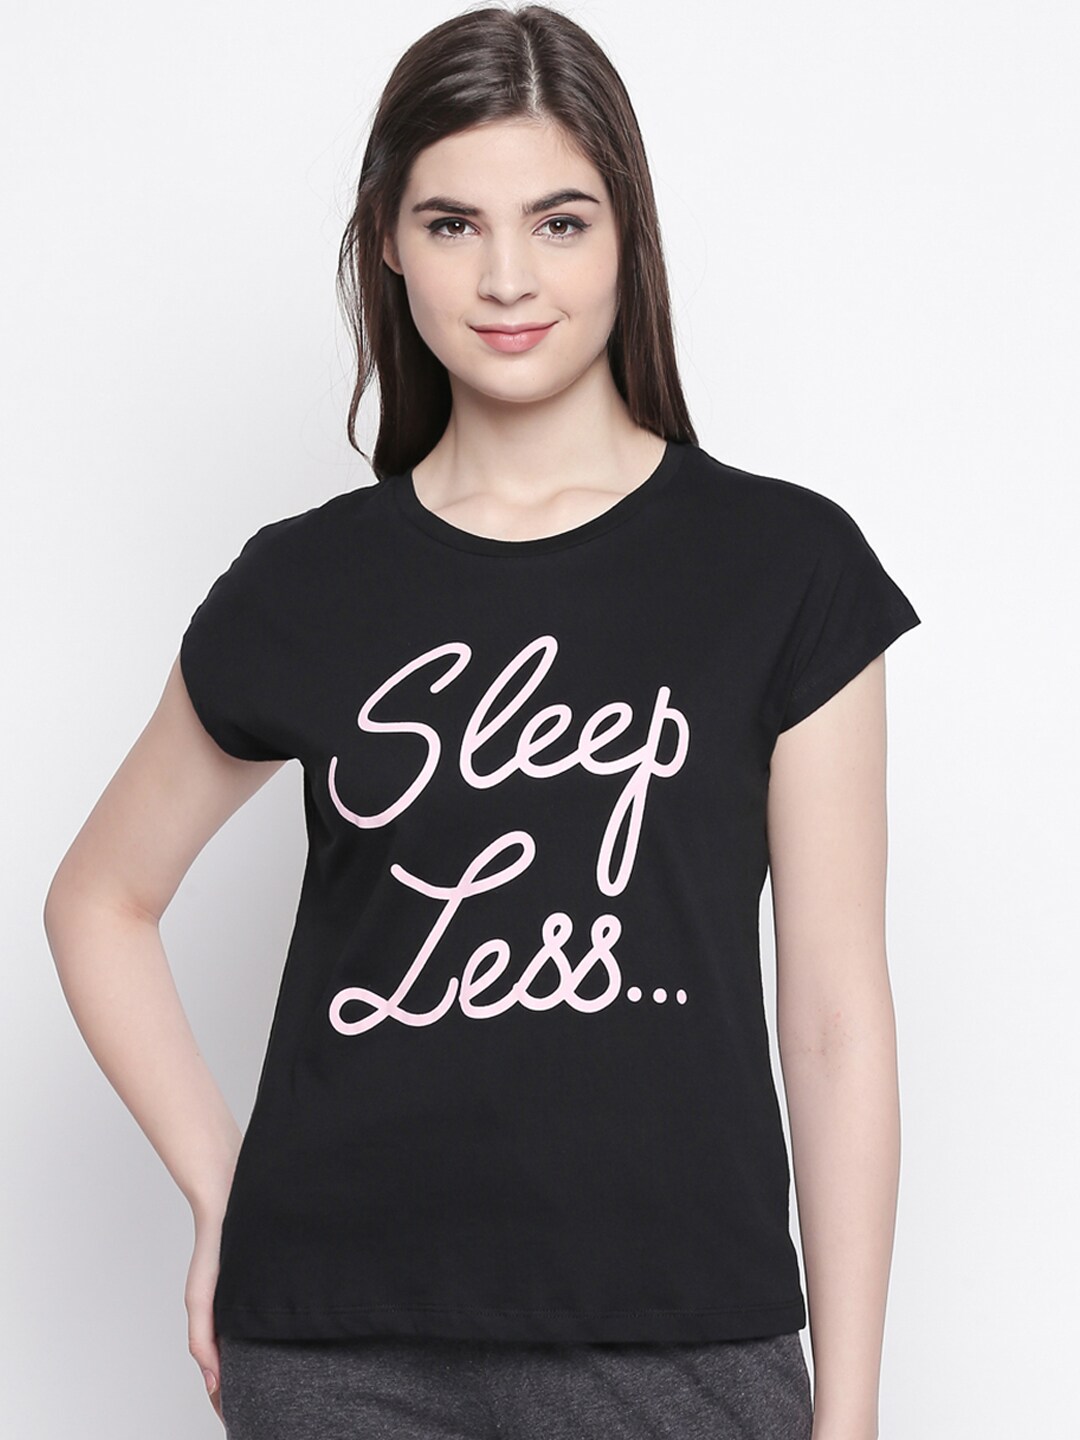 Dreamz by Pantaloons Women Black & Pink Printed Lounge T-shirt Price in India